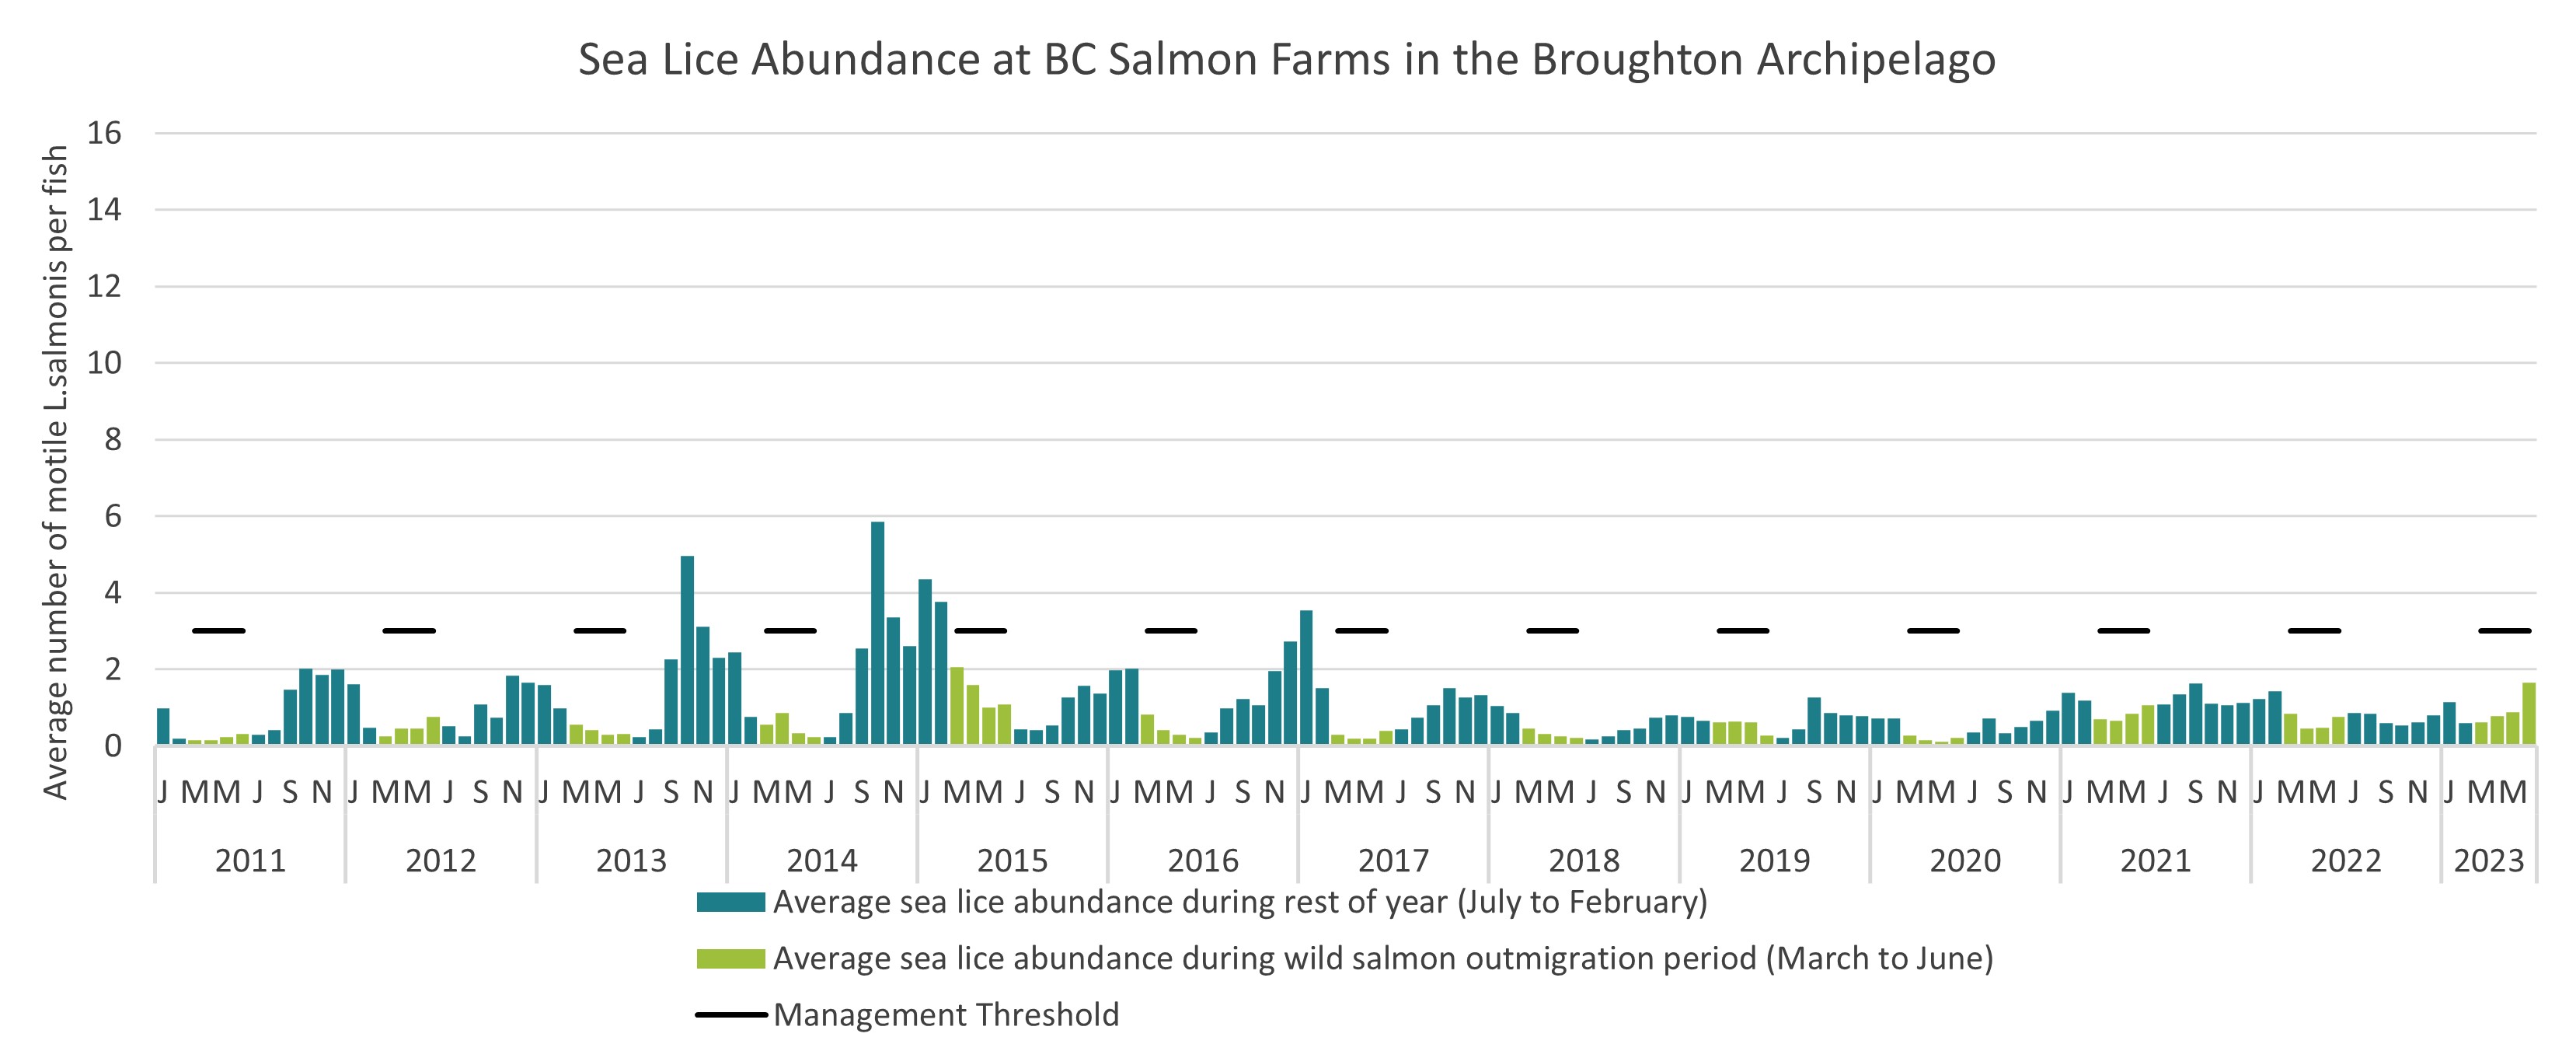 Sea Lice Abundance at BC Salmon Farms in the Broughton Archipelago, 2011 to 2022